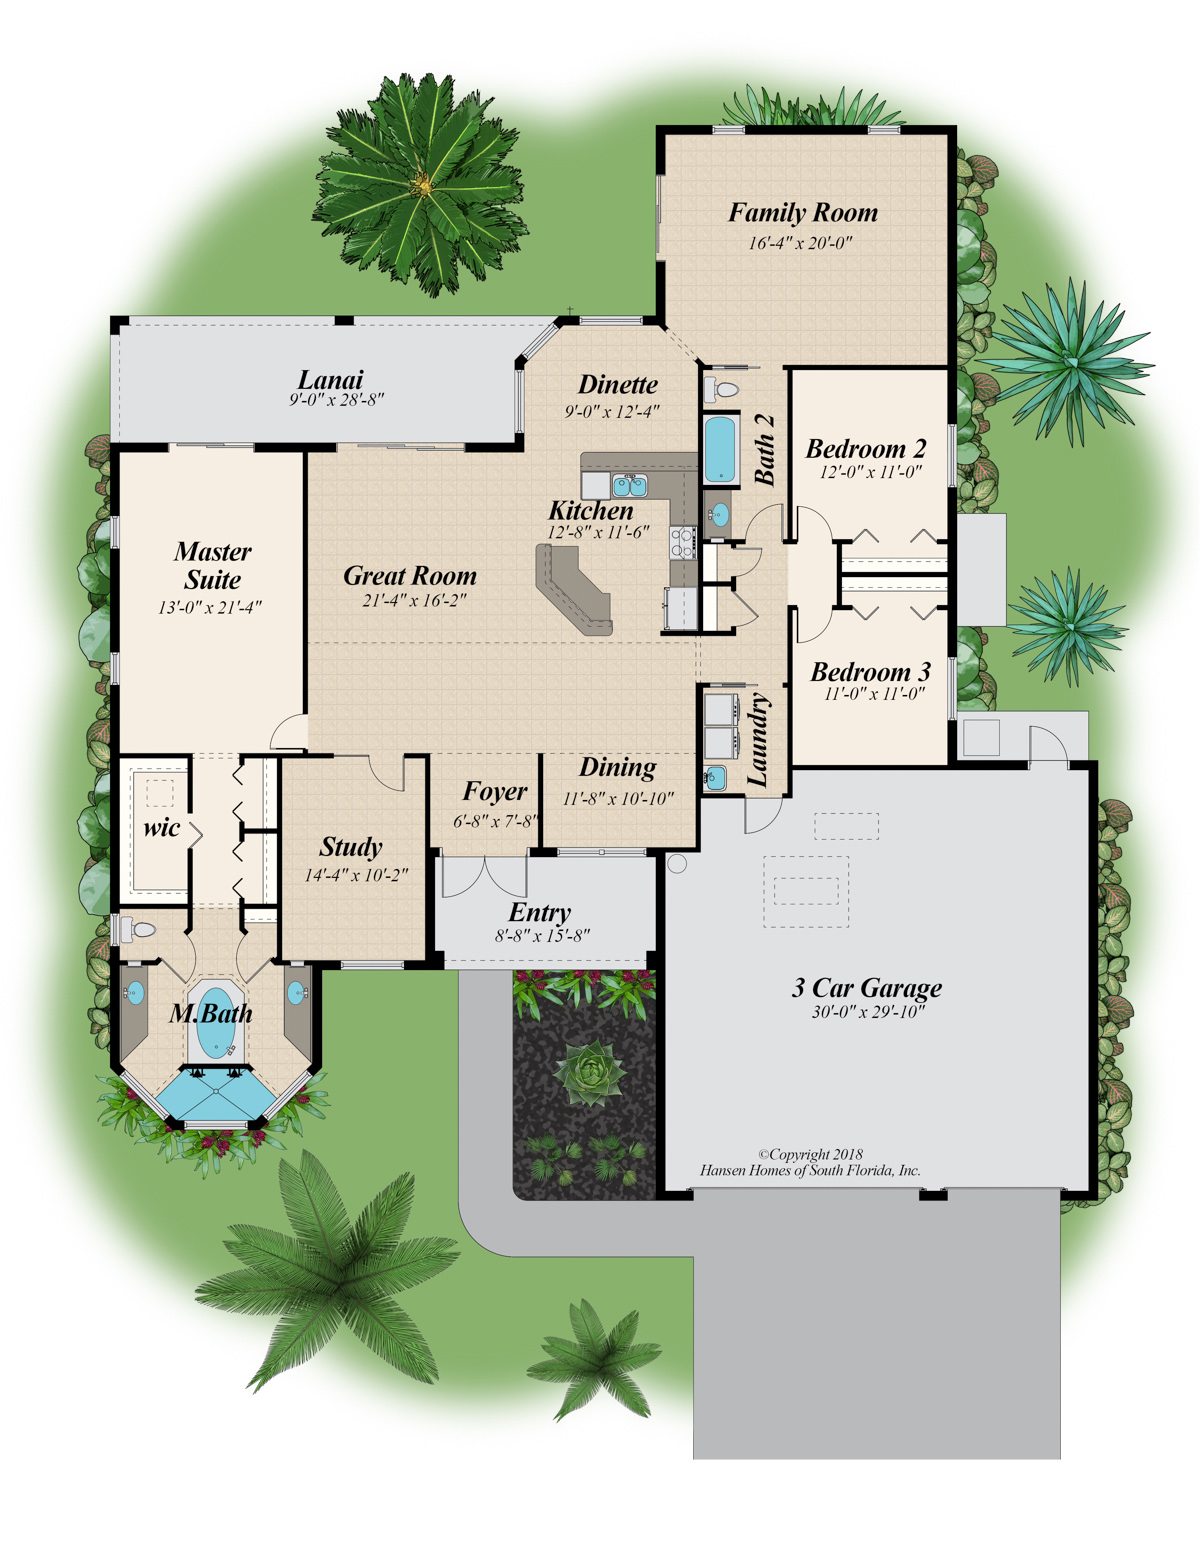 The Slater Grand Bath Family Room 3 Car Garage Home Plan Floor Plans